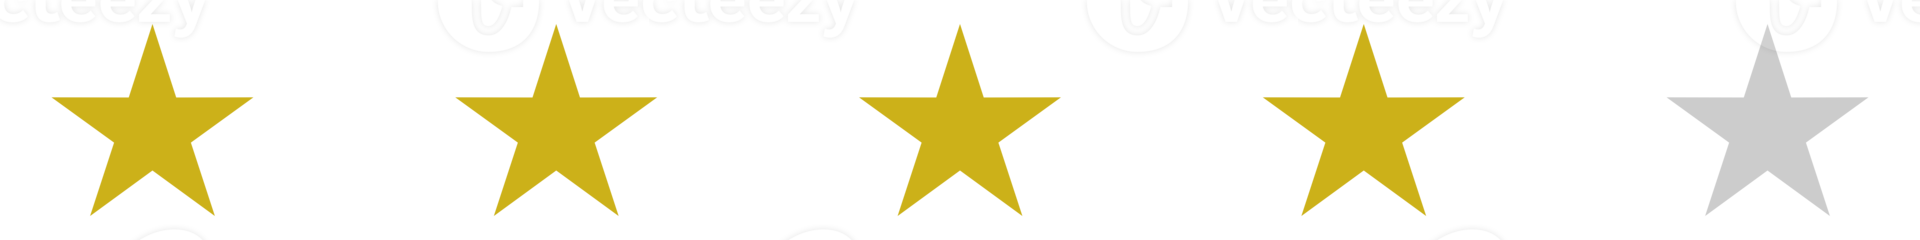 Five star, 5 Star Sign. Star Rating Icon Symbol for Pictogram, Apps, Website or Graphic Design Element. Vector Illustration png